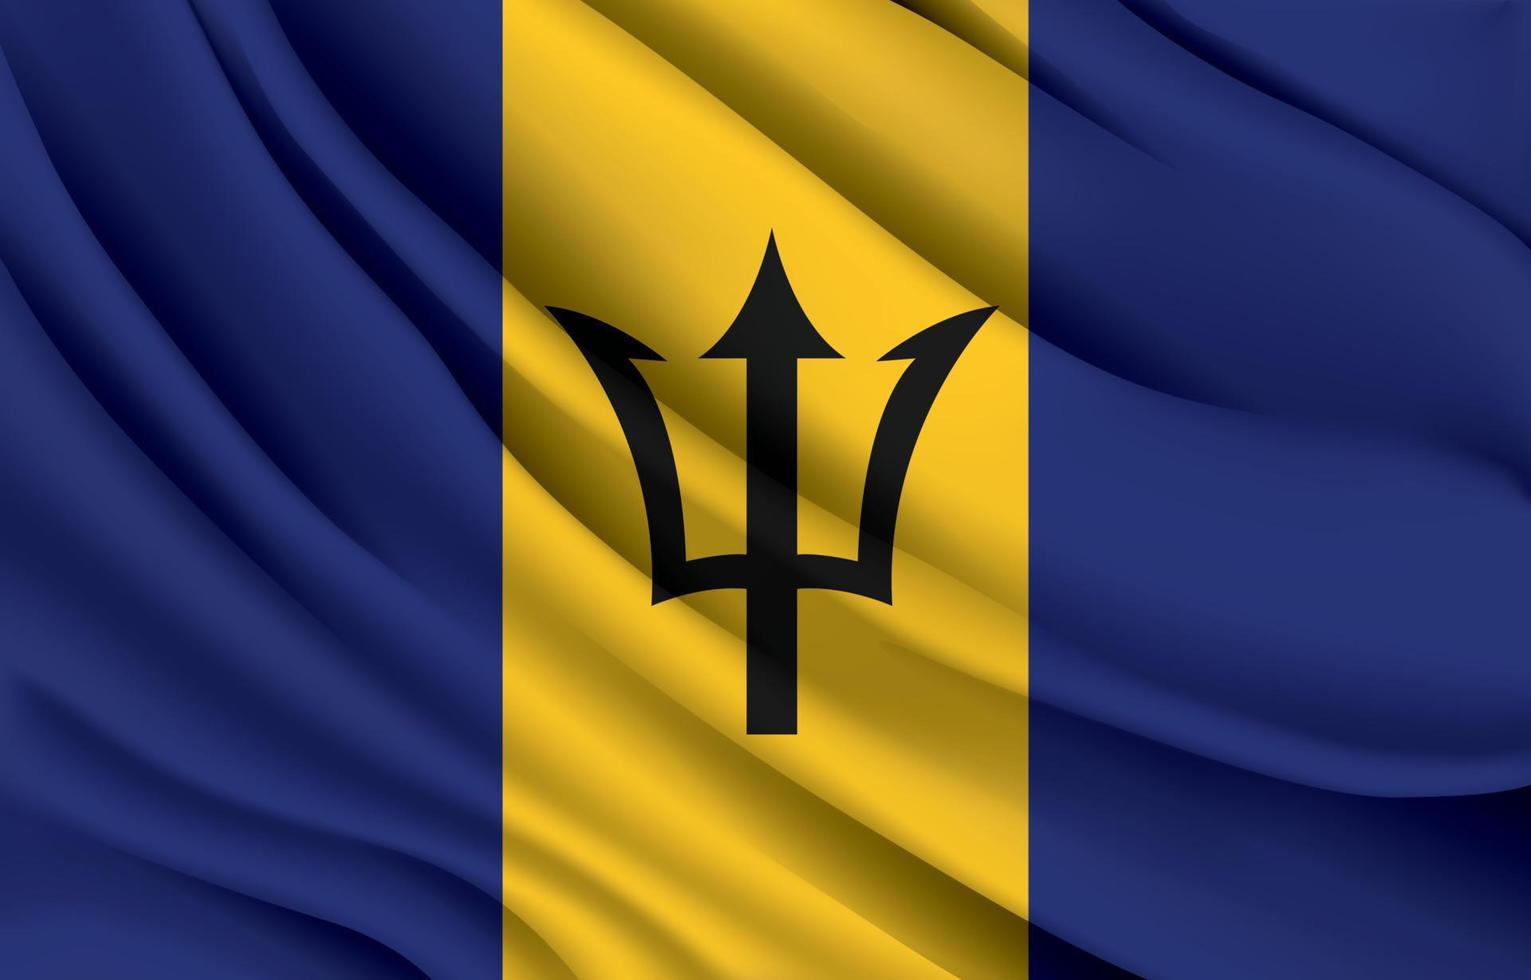 Barbados national flag waving realistic vector illustration